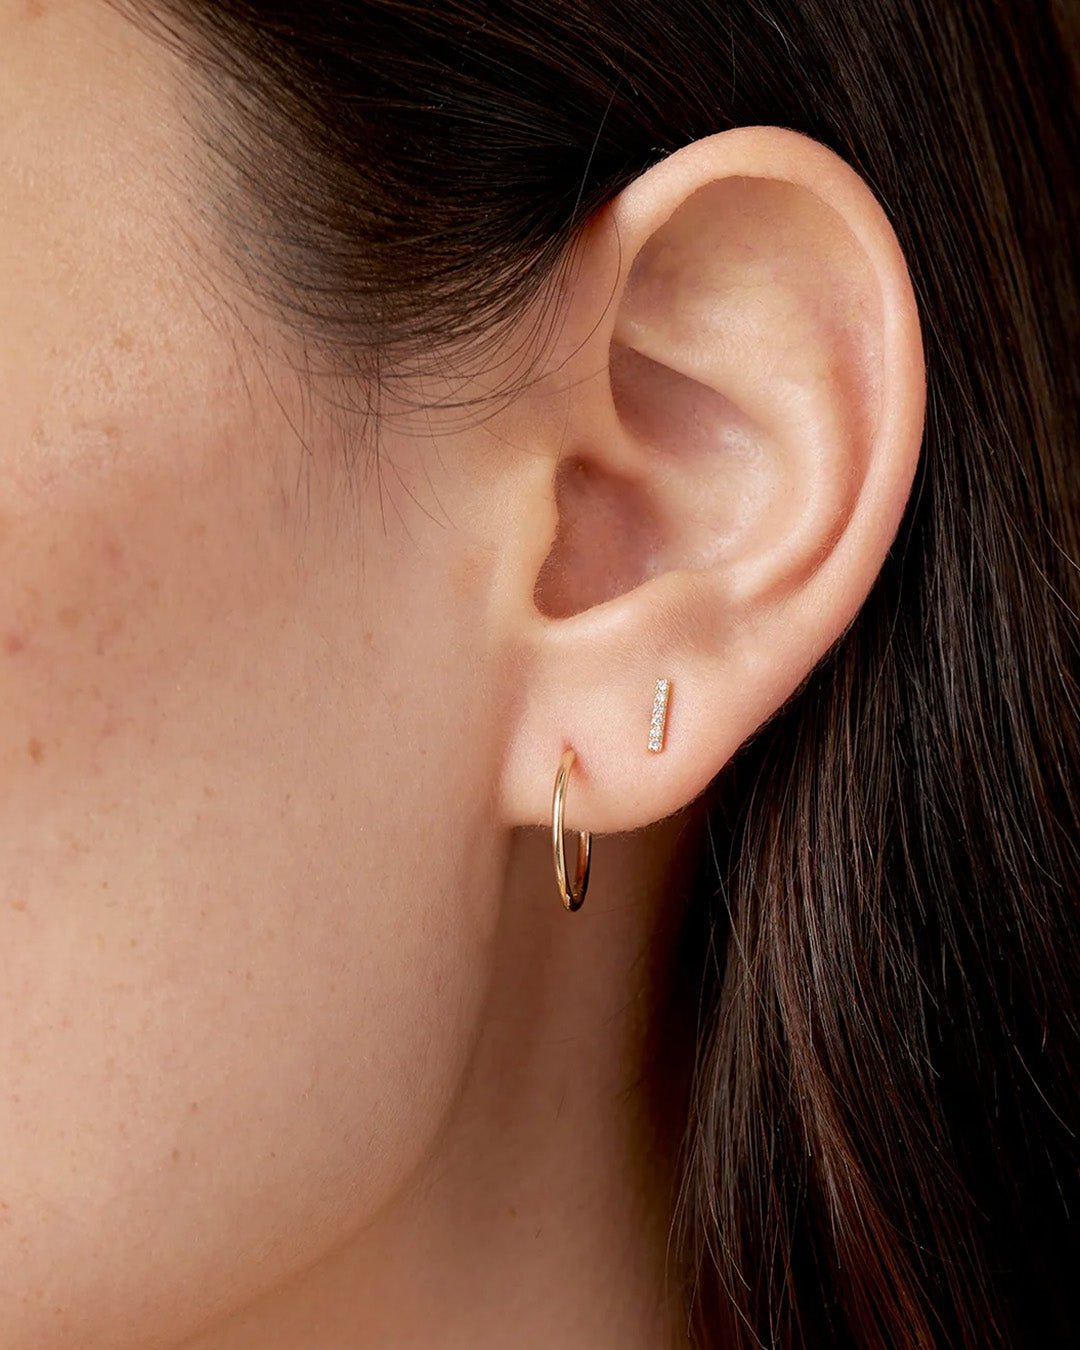 Classic Diamond Threaded Flat Back Studs Earring in 14K Solid Gold/Pair, Women's by Gorjana